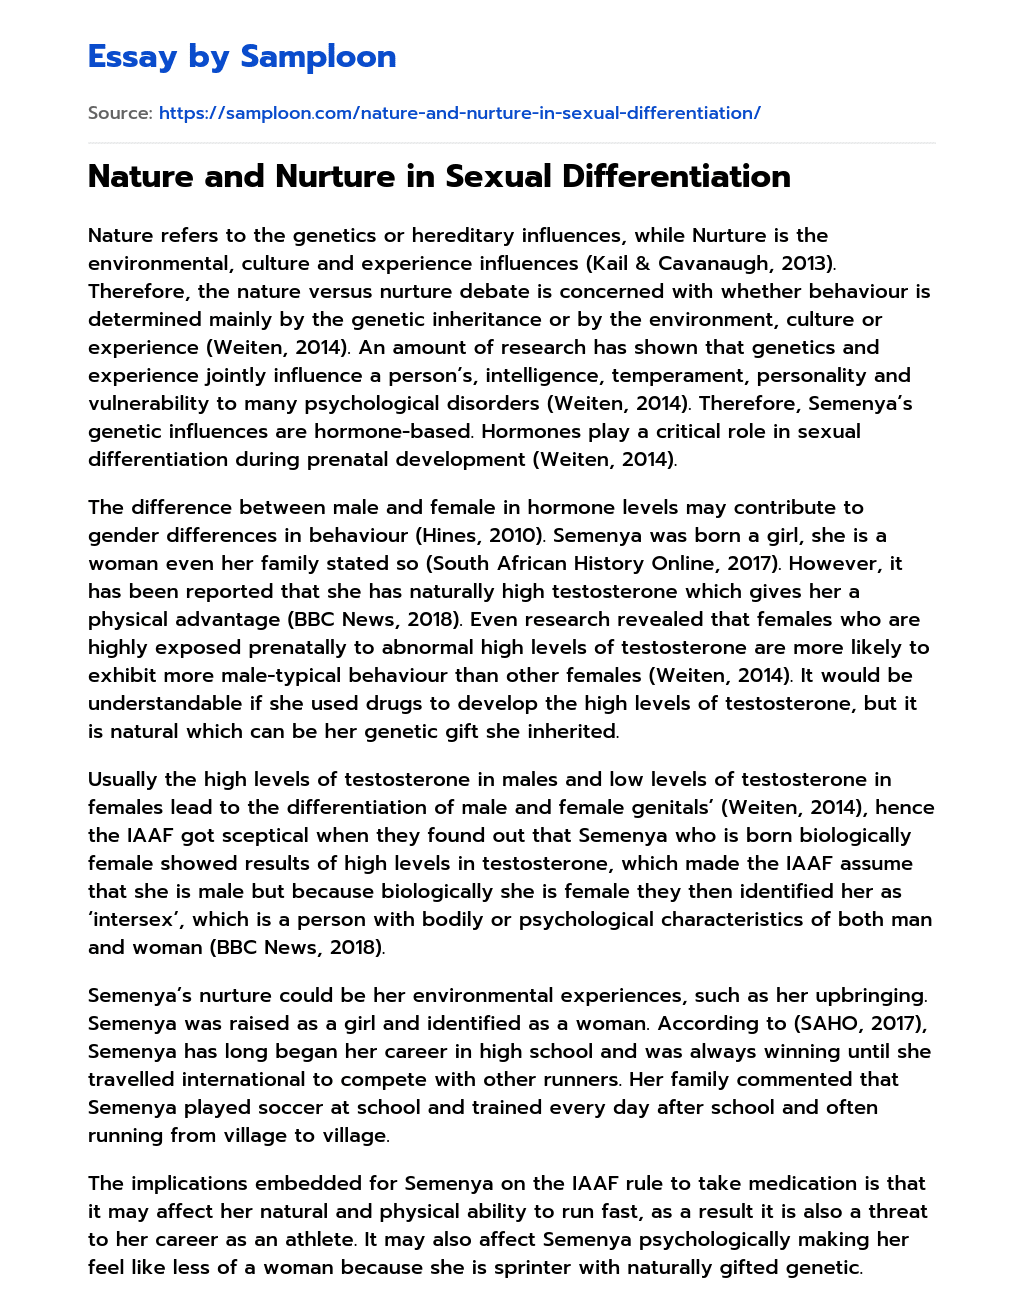 Nature and Nurture in Sexual Differentiation essay